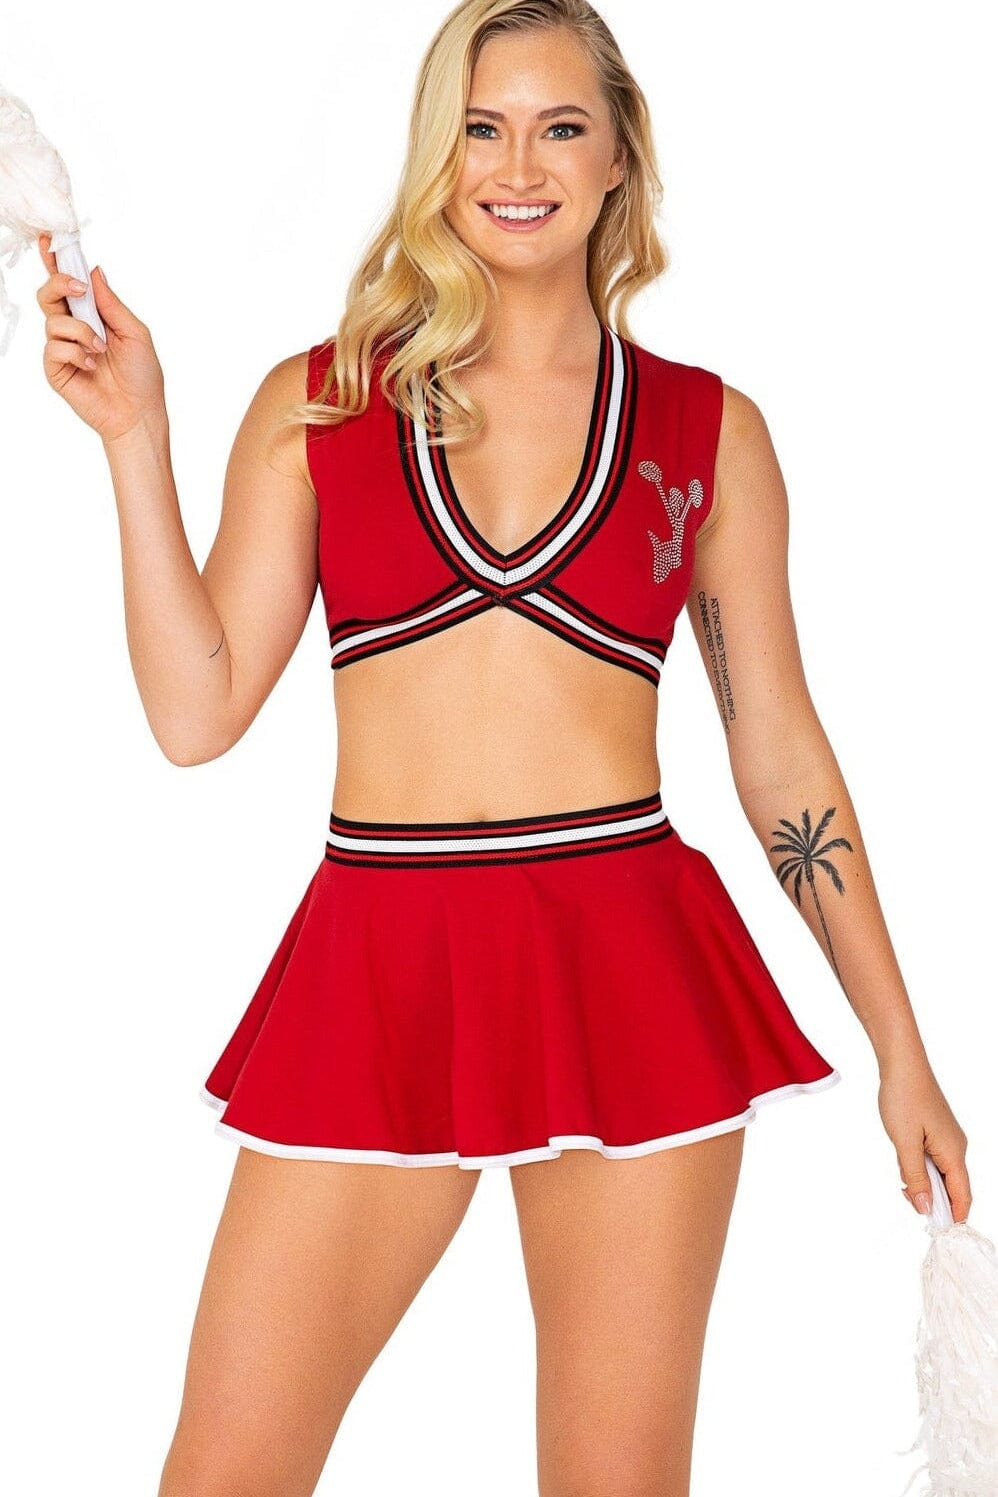 3pc School Spirit-Cheerleader Costumes-Roma Costumes-Red-L-SEXYSHOES.COM